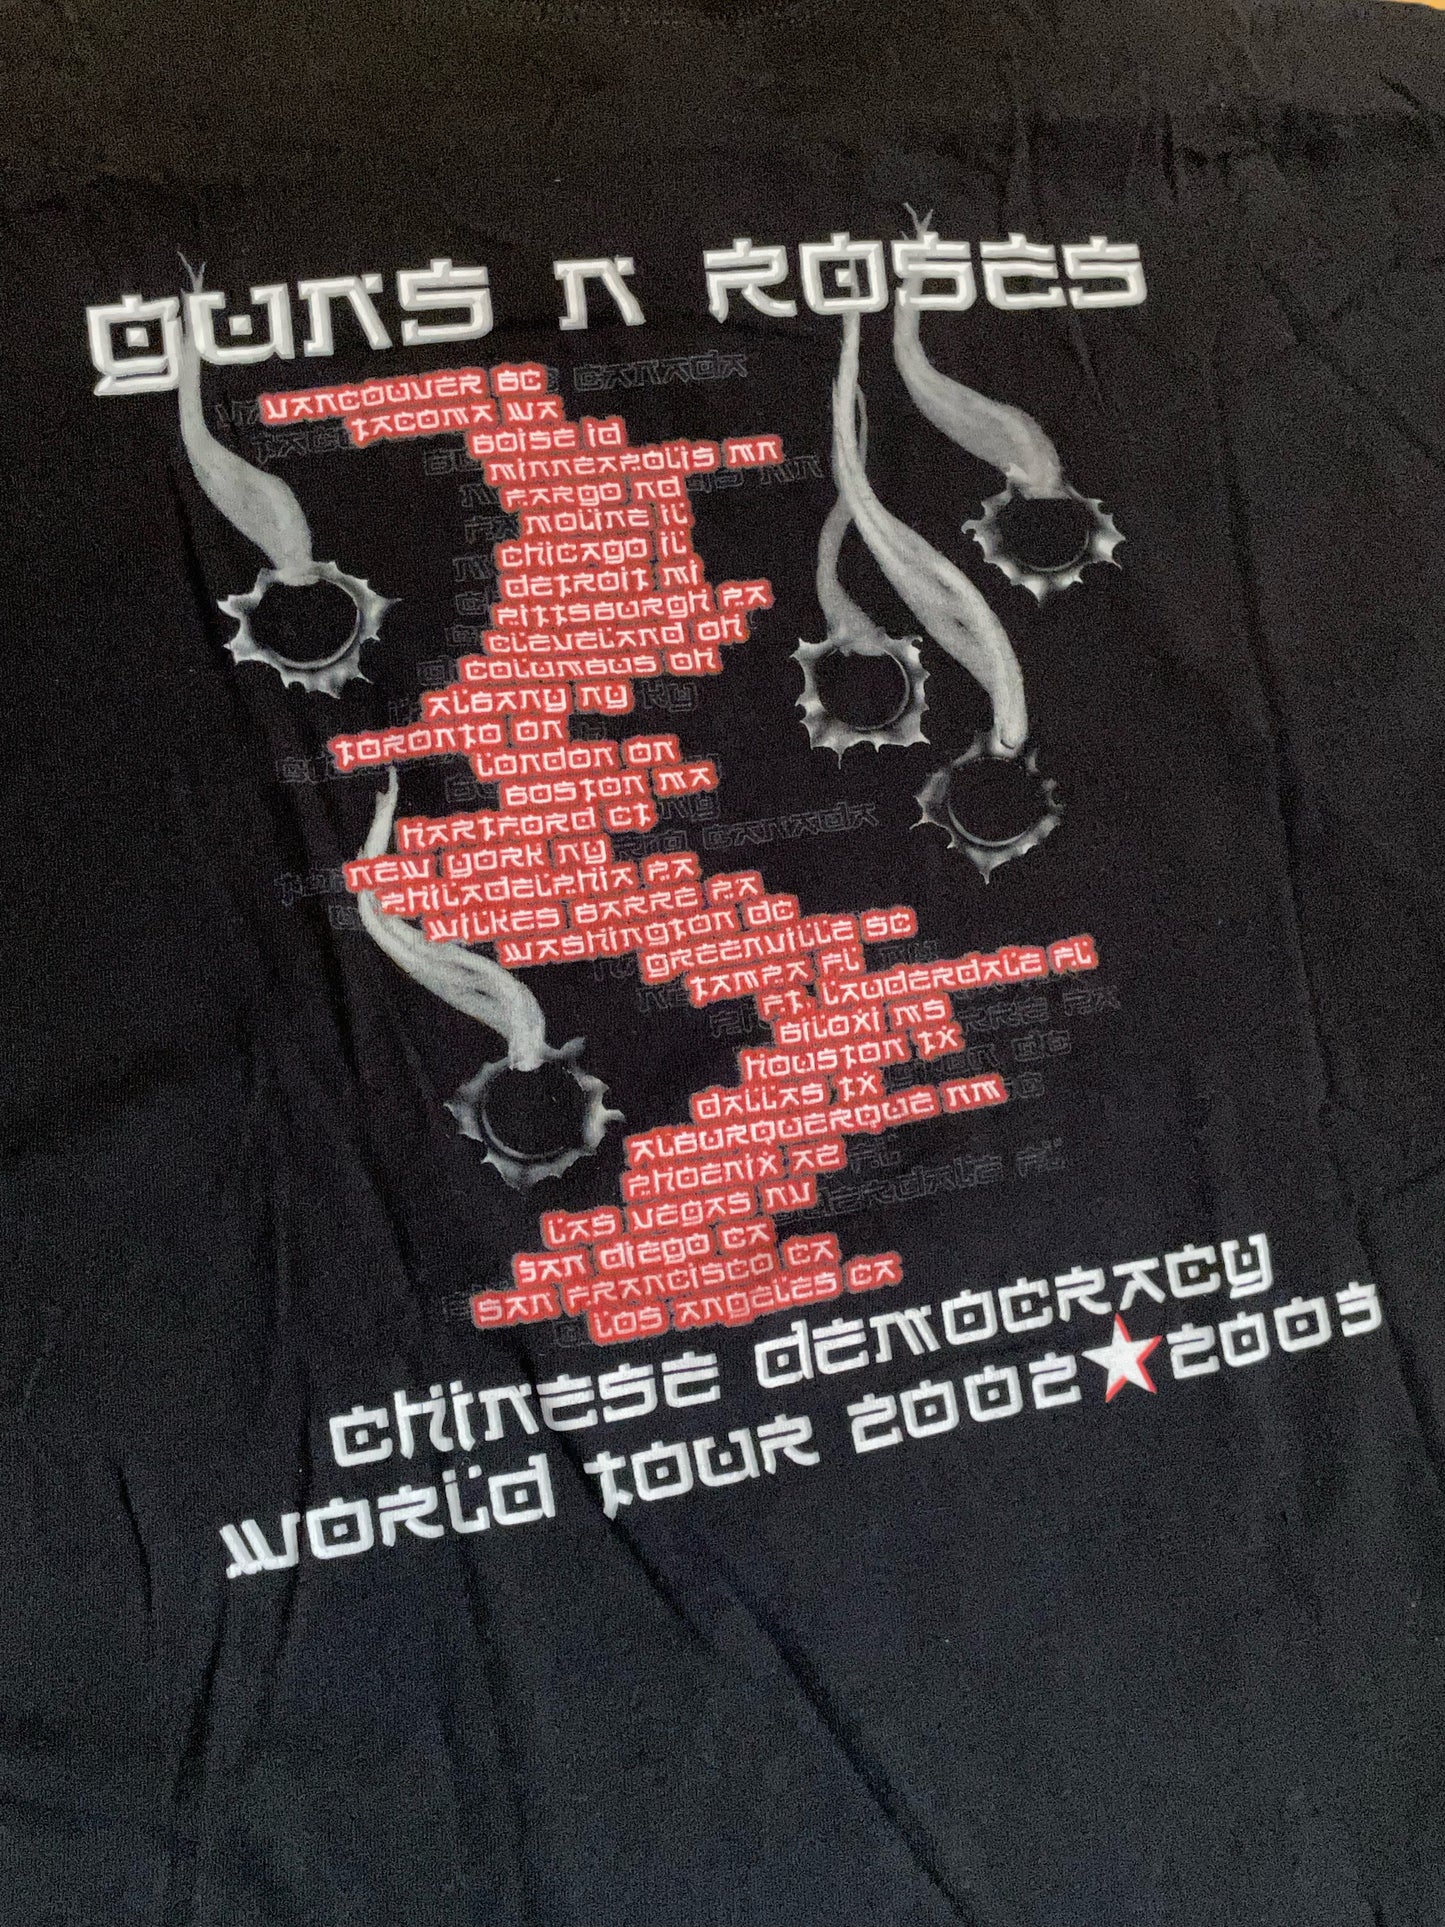 GUNS N' ROSES "WORLD TOUR 2002-2003" MUSIC BAND T-SHIRT  SZ: XL